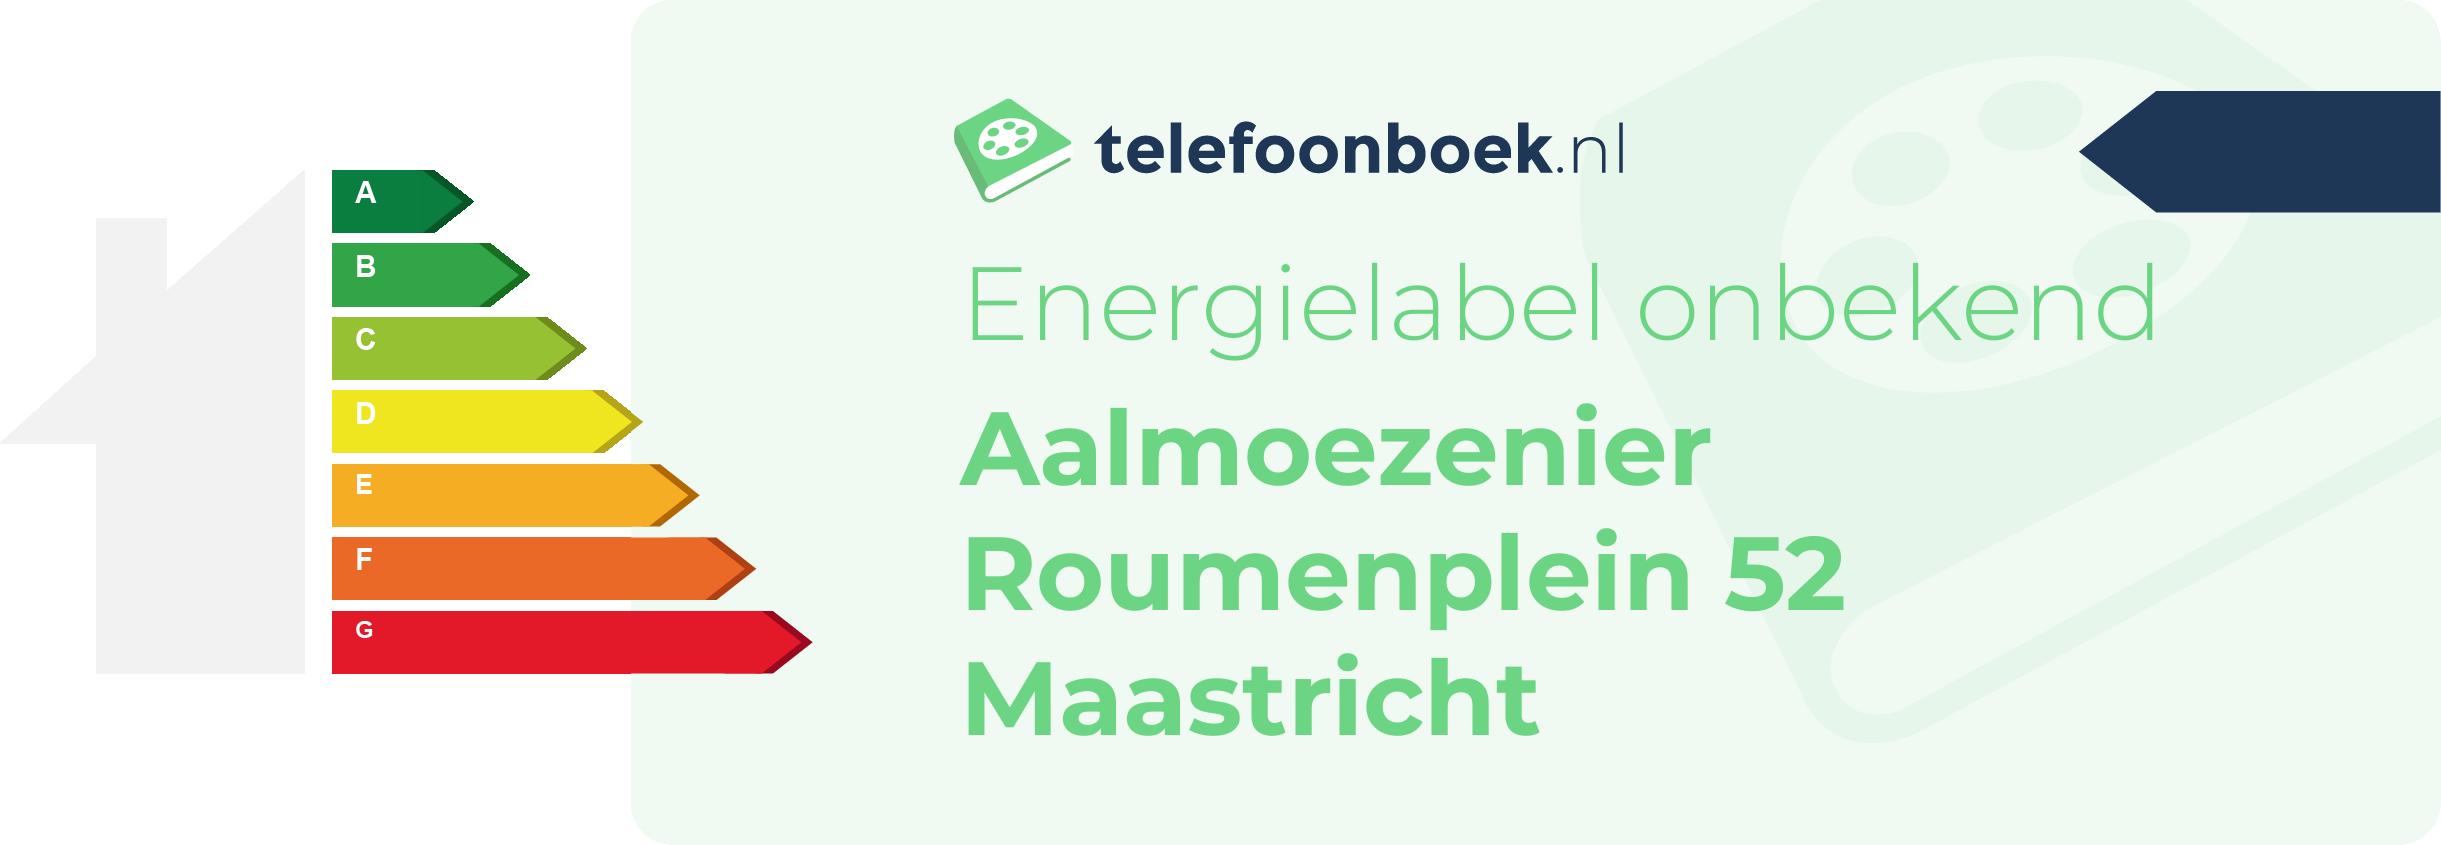 Energielabel Aalmoezenier Roumenplein 52 Maastricht